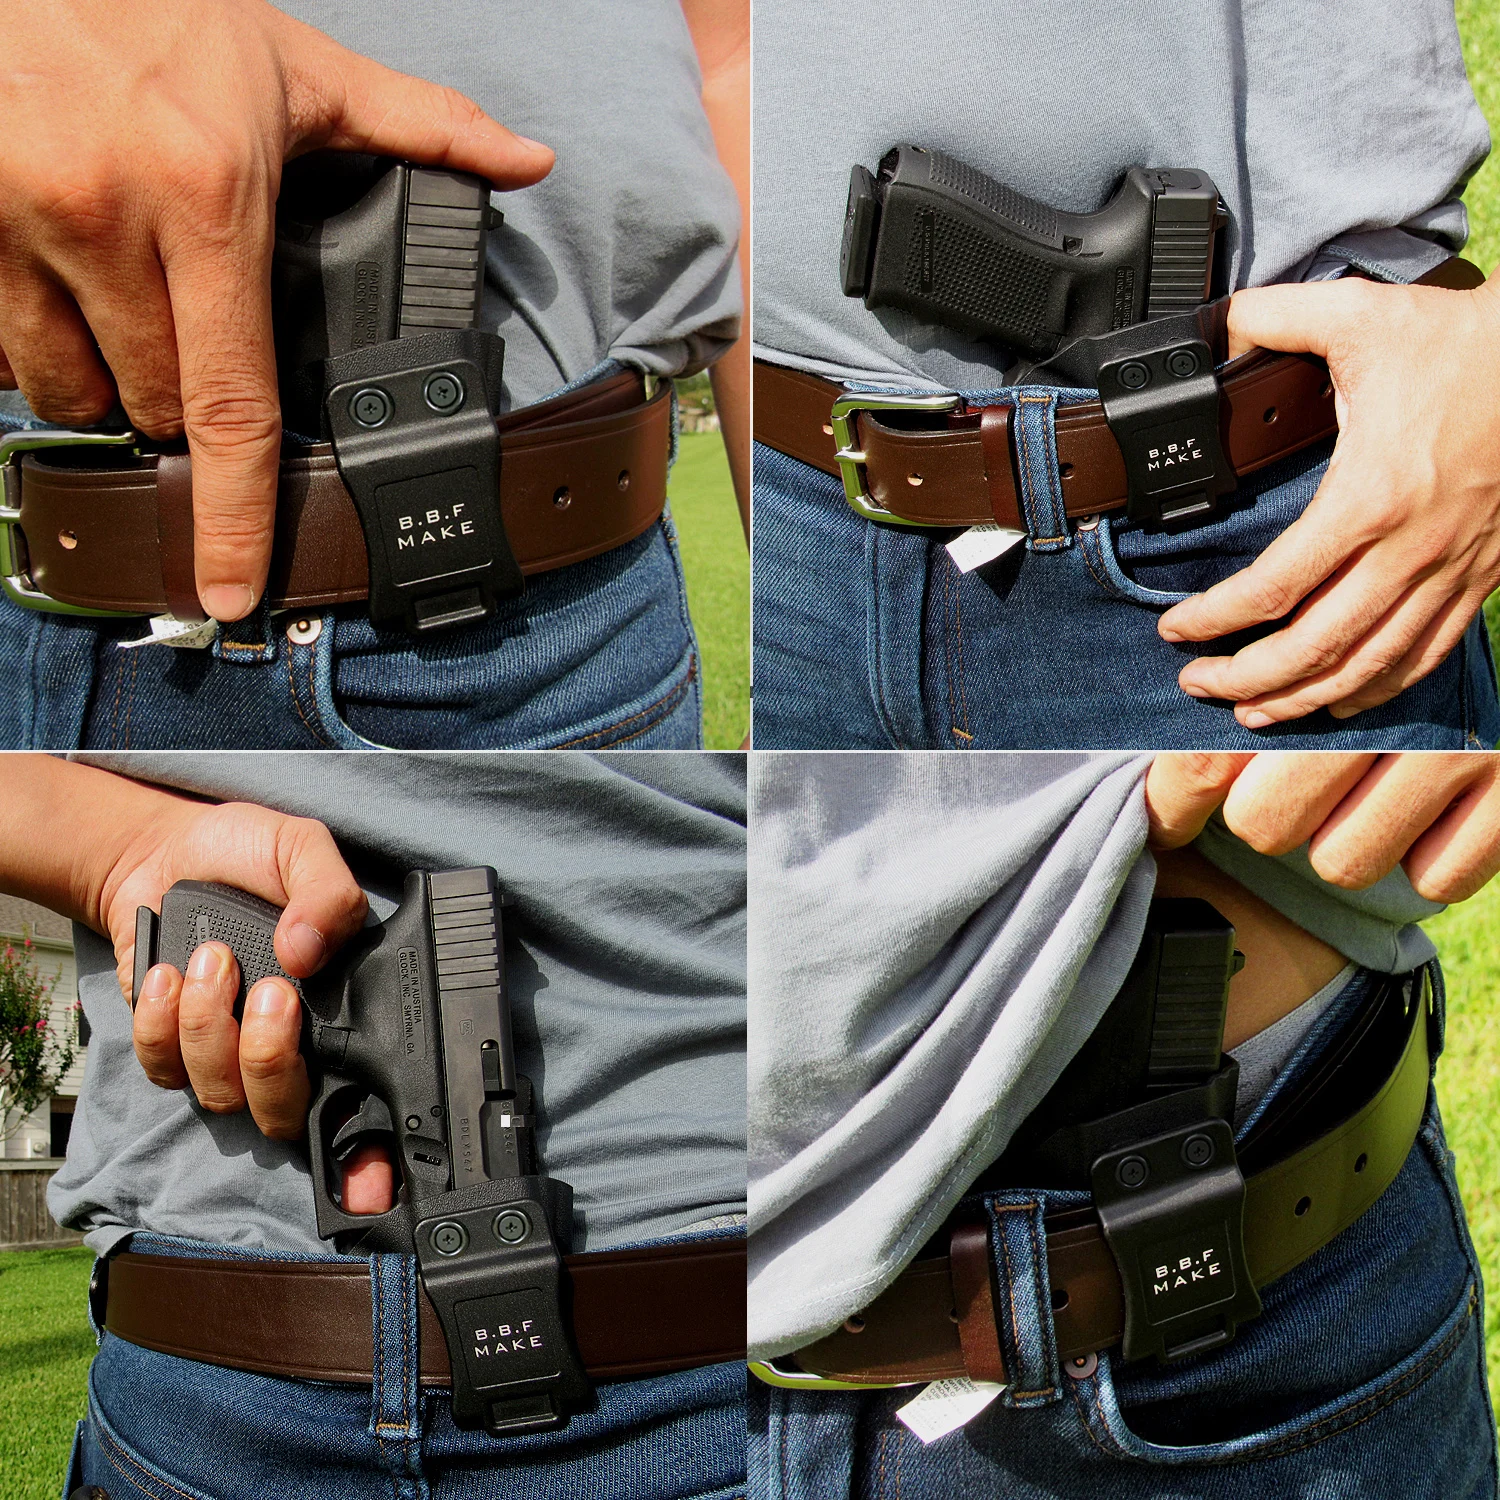 
OEM/ODM IWB KYDEX Holster Fits: Glock 19 19X 23 25 32 CZ P10 Tactical Gun Holster Inside Concealed Waist Carry Pistol Case Tan 